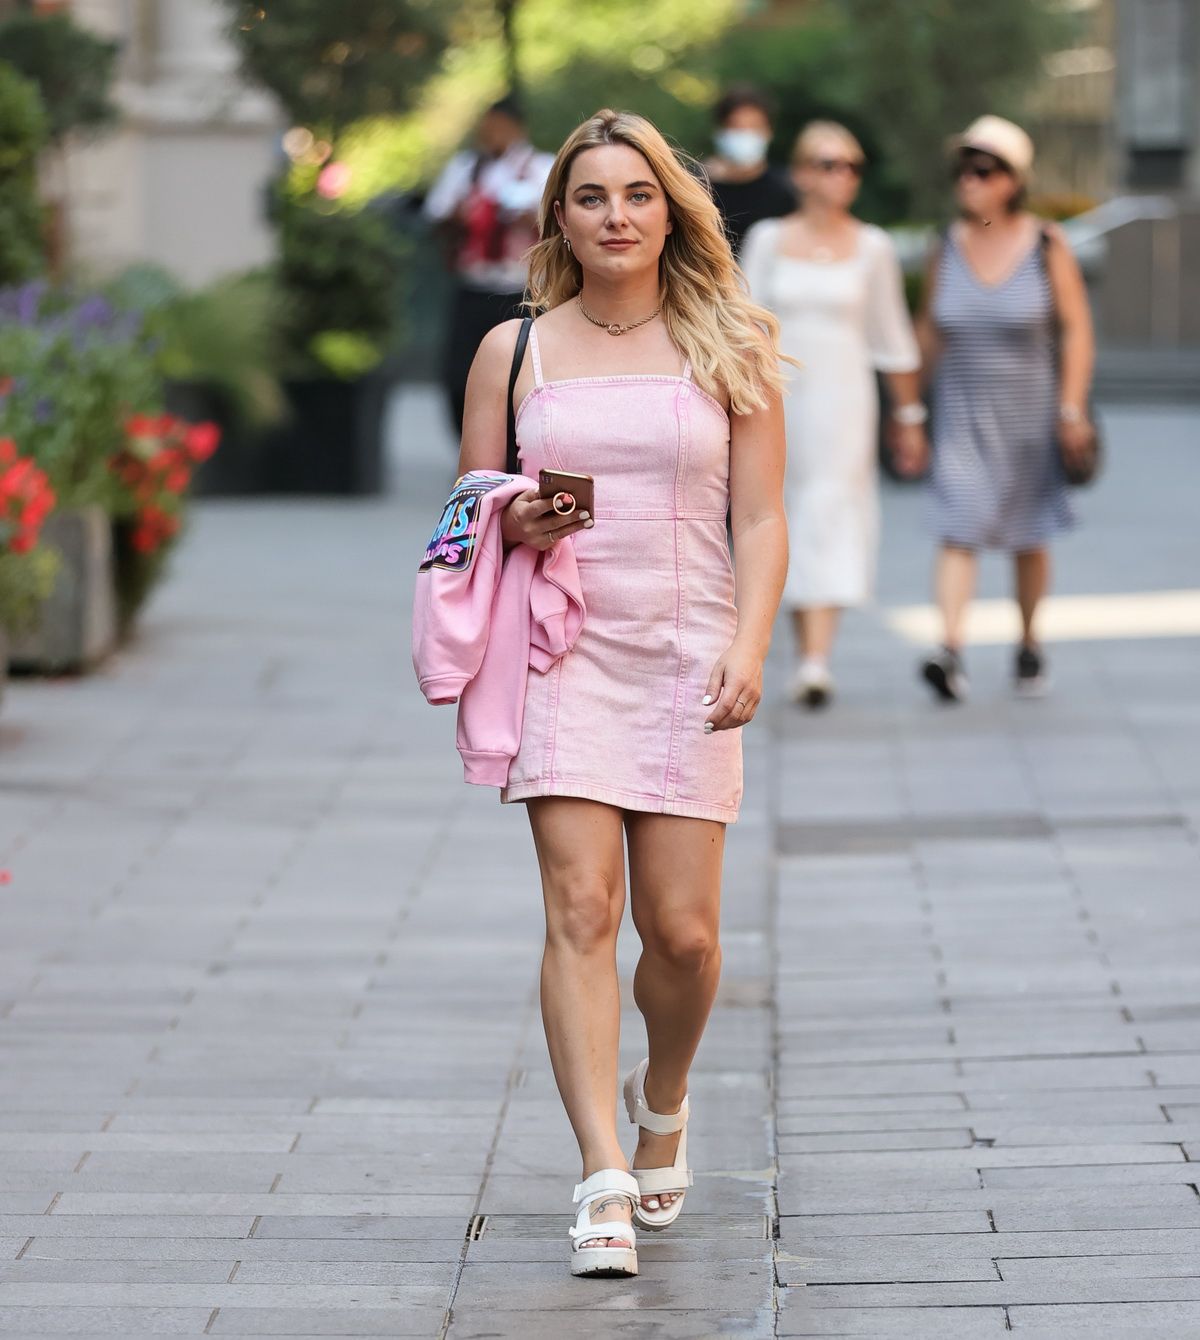 Sian Welby Pink Denim Mini Dress Out London